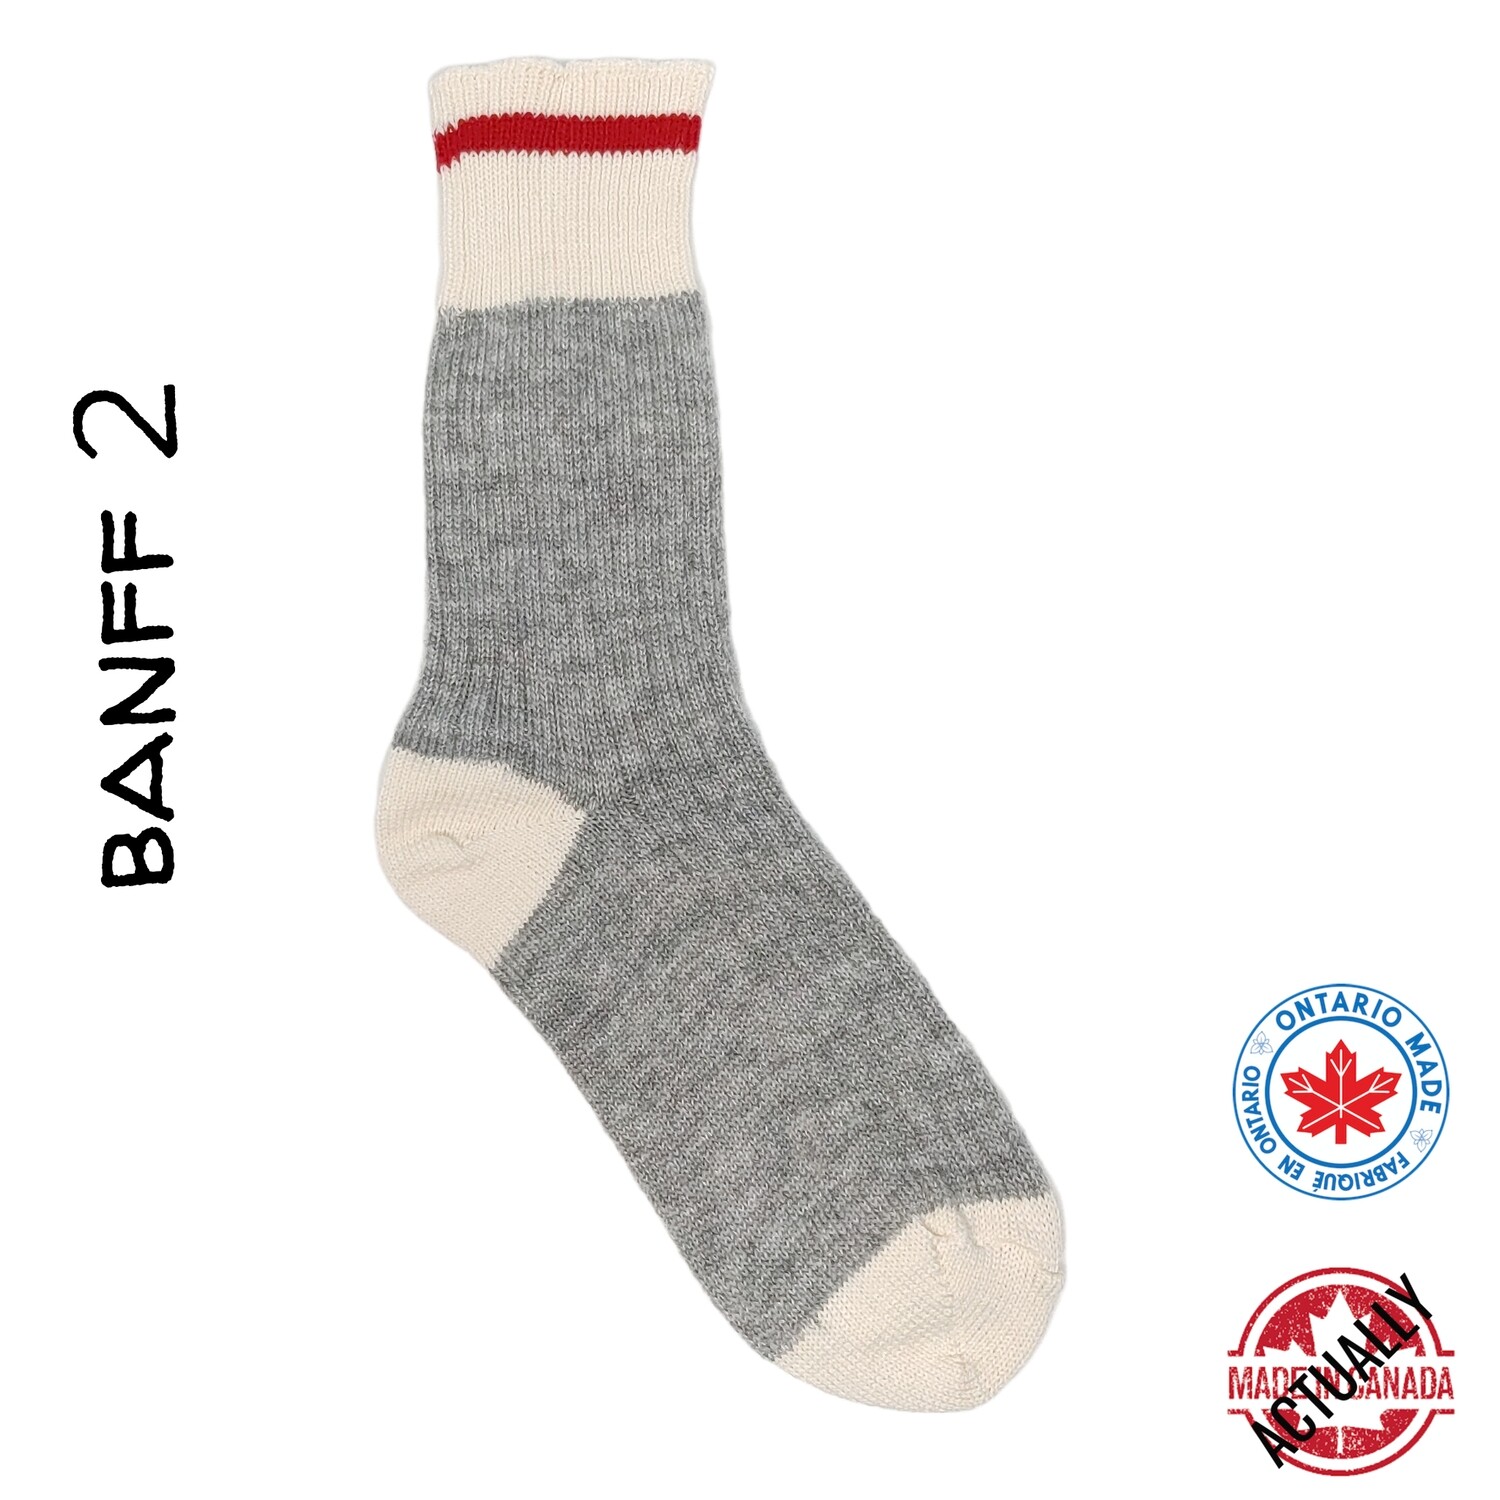 Banff 2 Wool Cabin Socks 2-pair pack